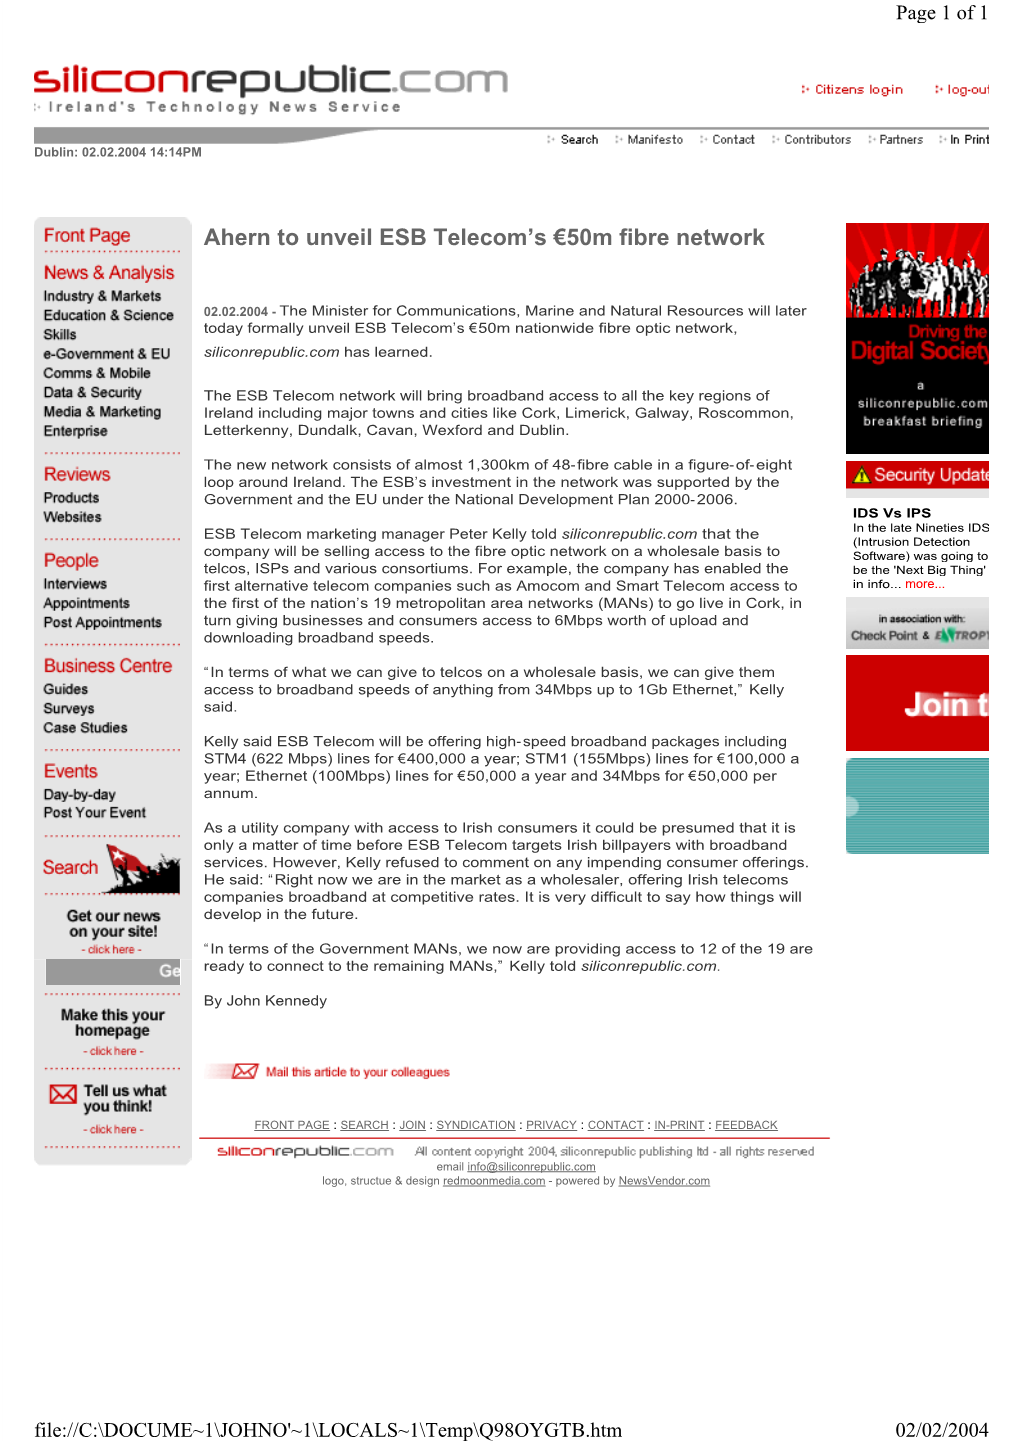 Ahern to Unveil ESB Telecom's €50M Fibre Network